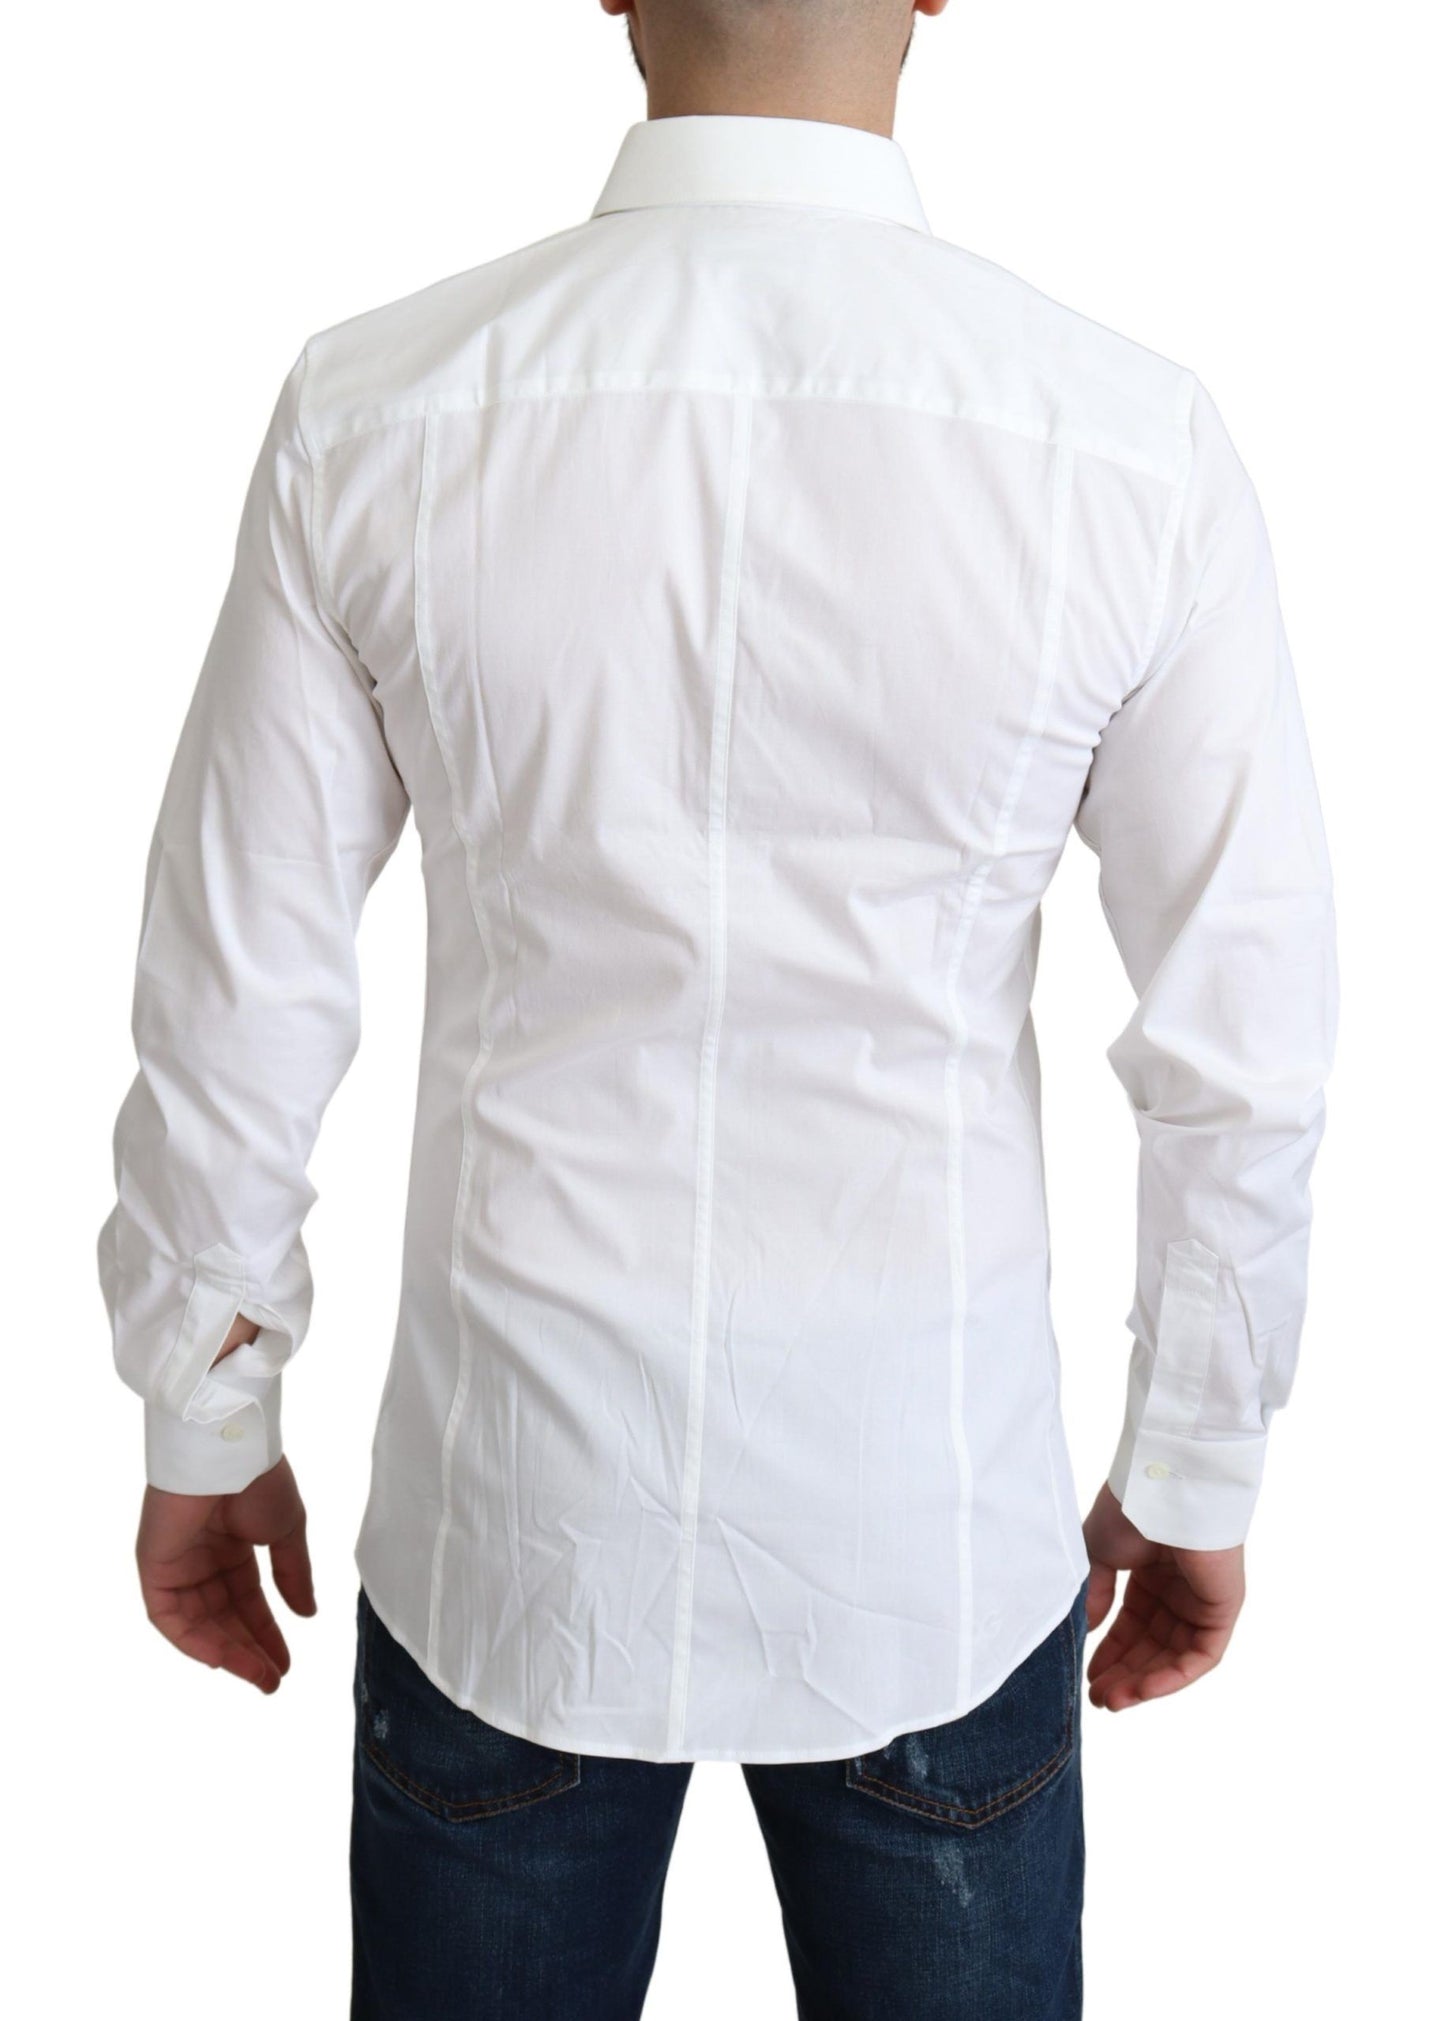 Dolce & Gabbana Elegant White Cotton Stretch Dress Shirt